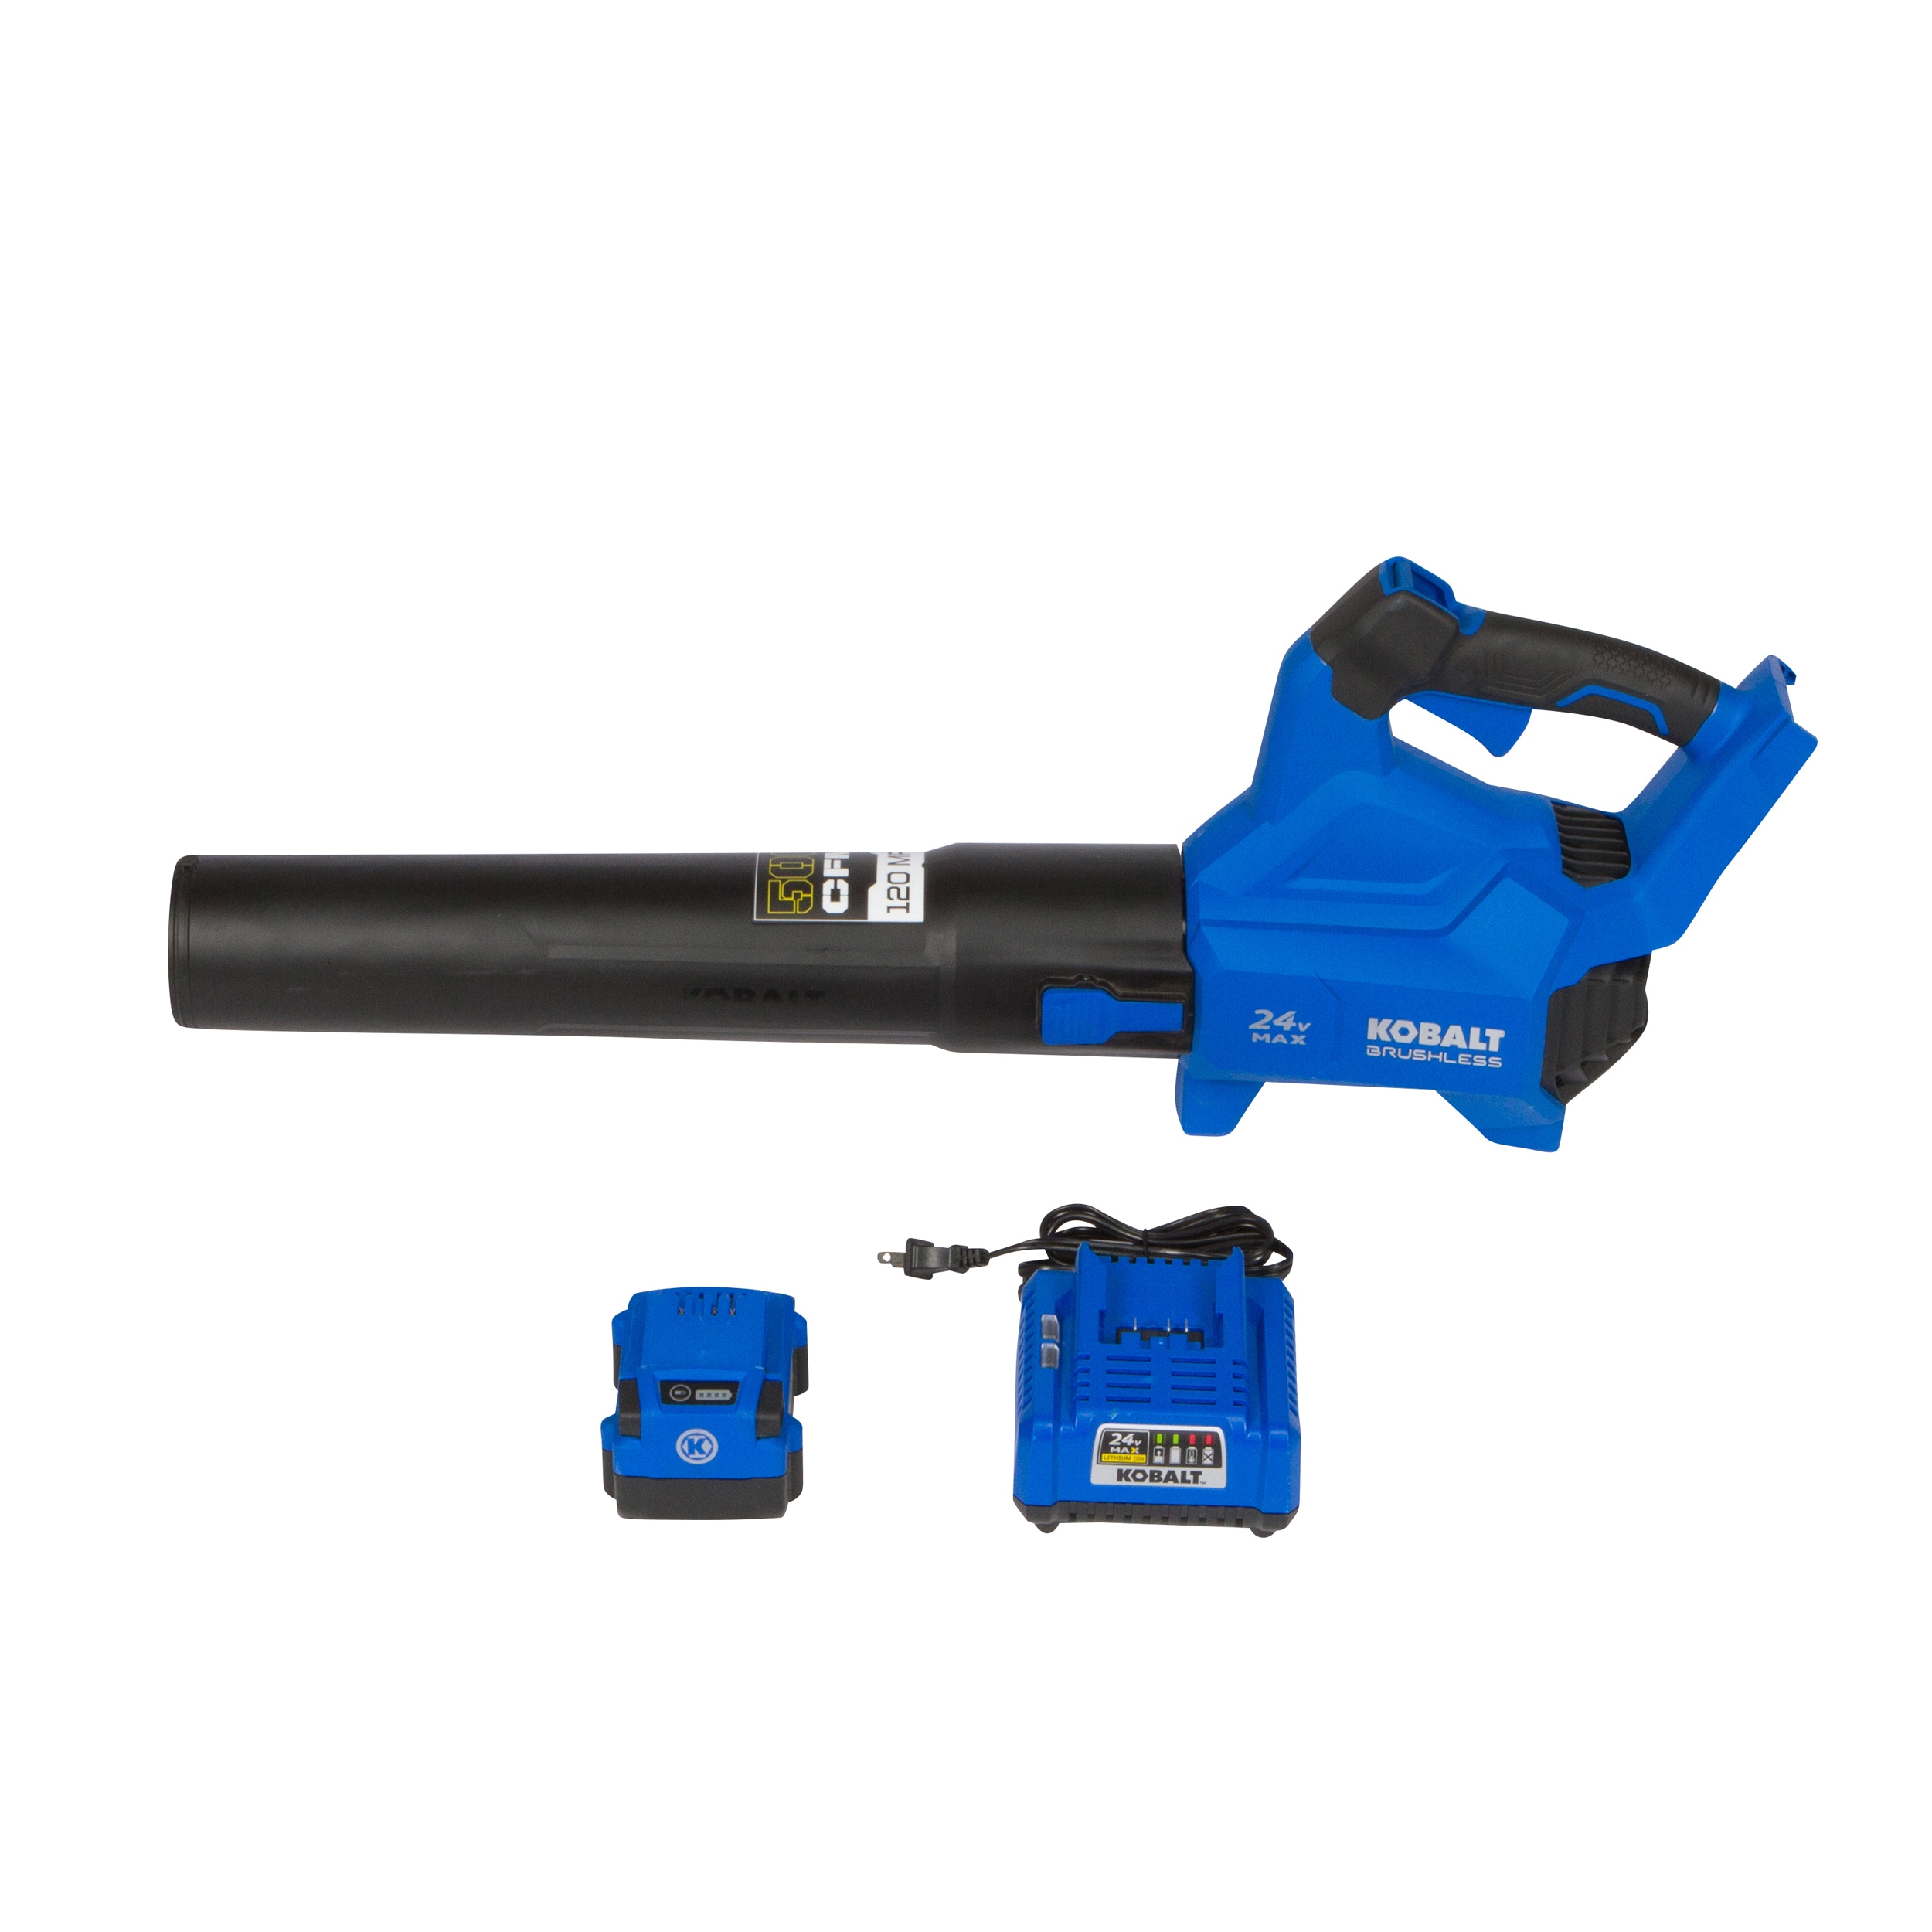 Kobalt 24-volt Max 500-CFM 120-MPH Brushless Handheld Cordless Electric Leaf Blower 4 Ah (Battery & Charger Included)